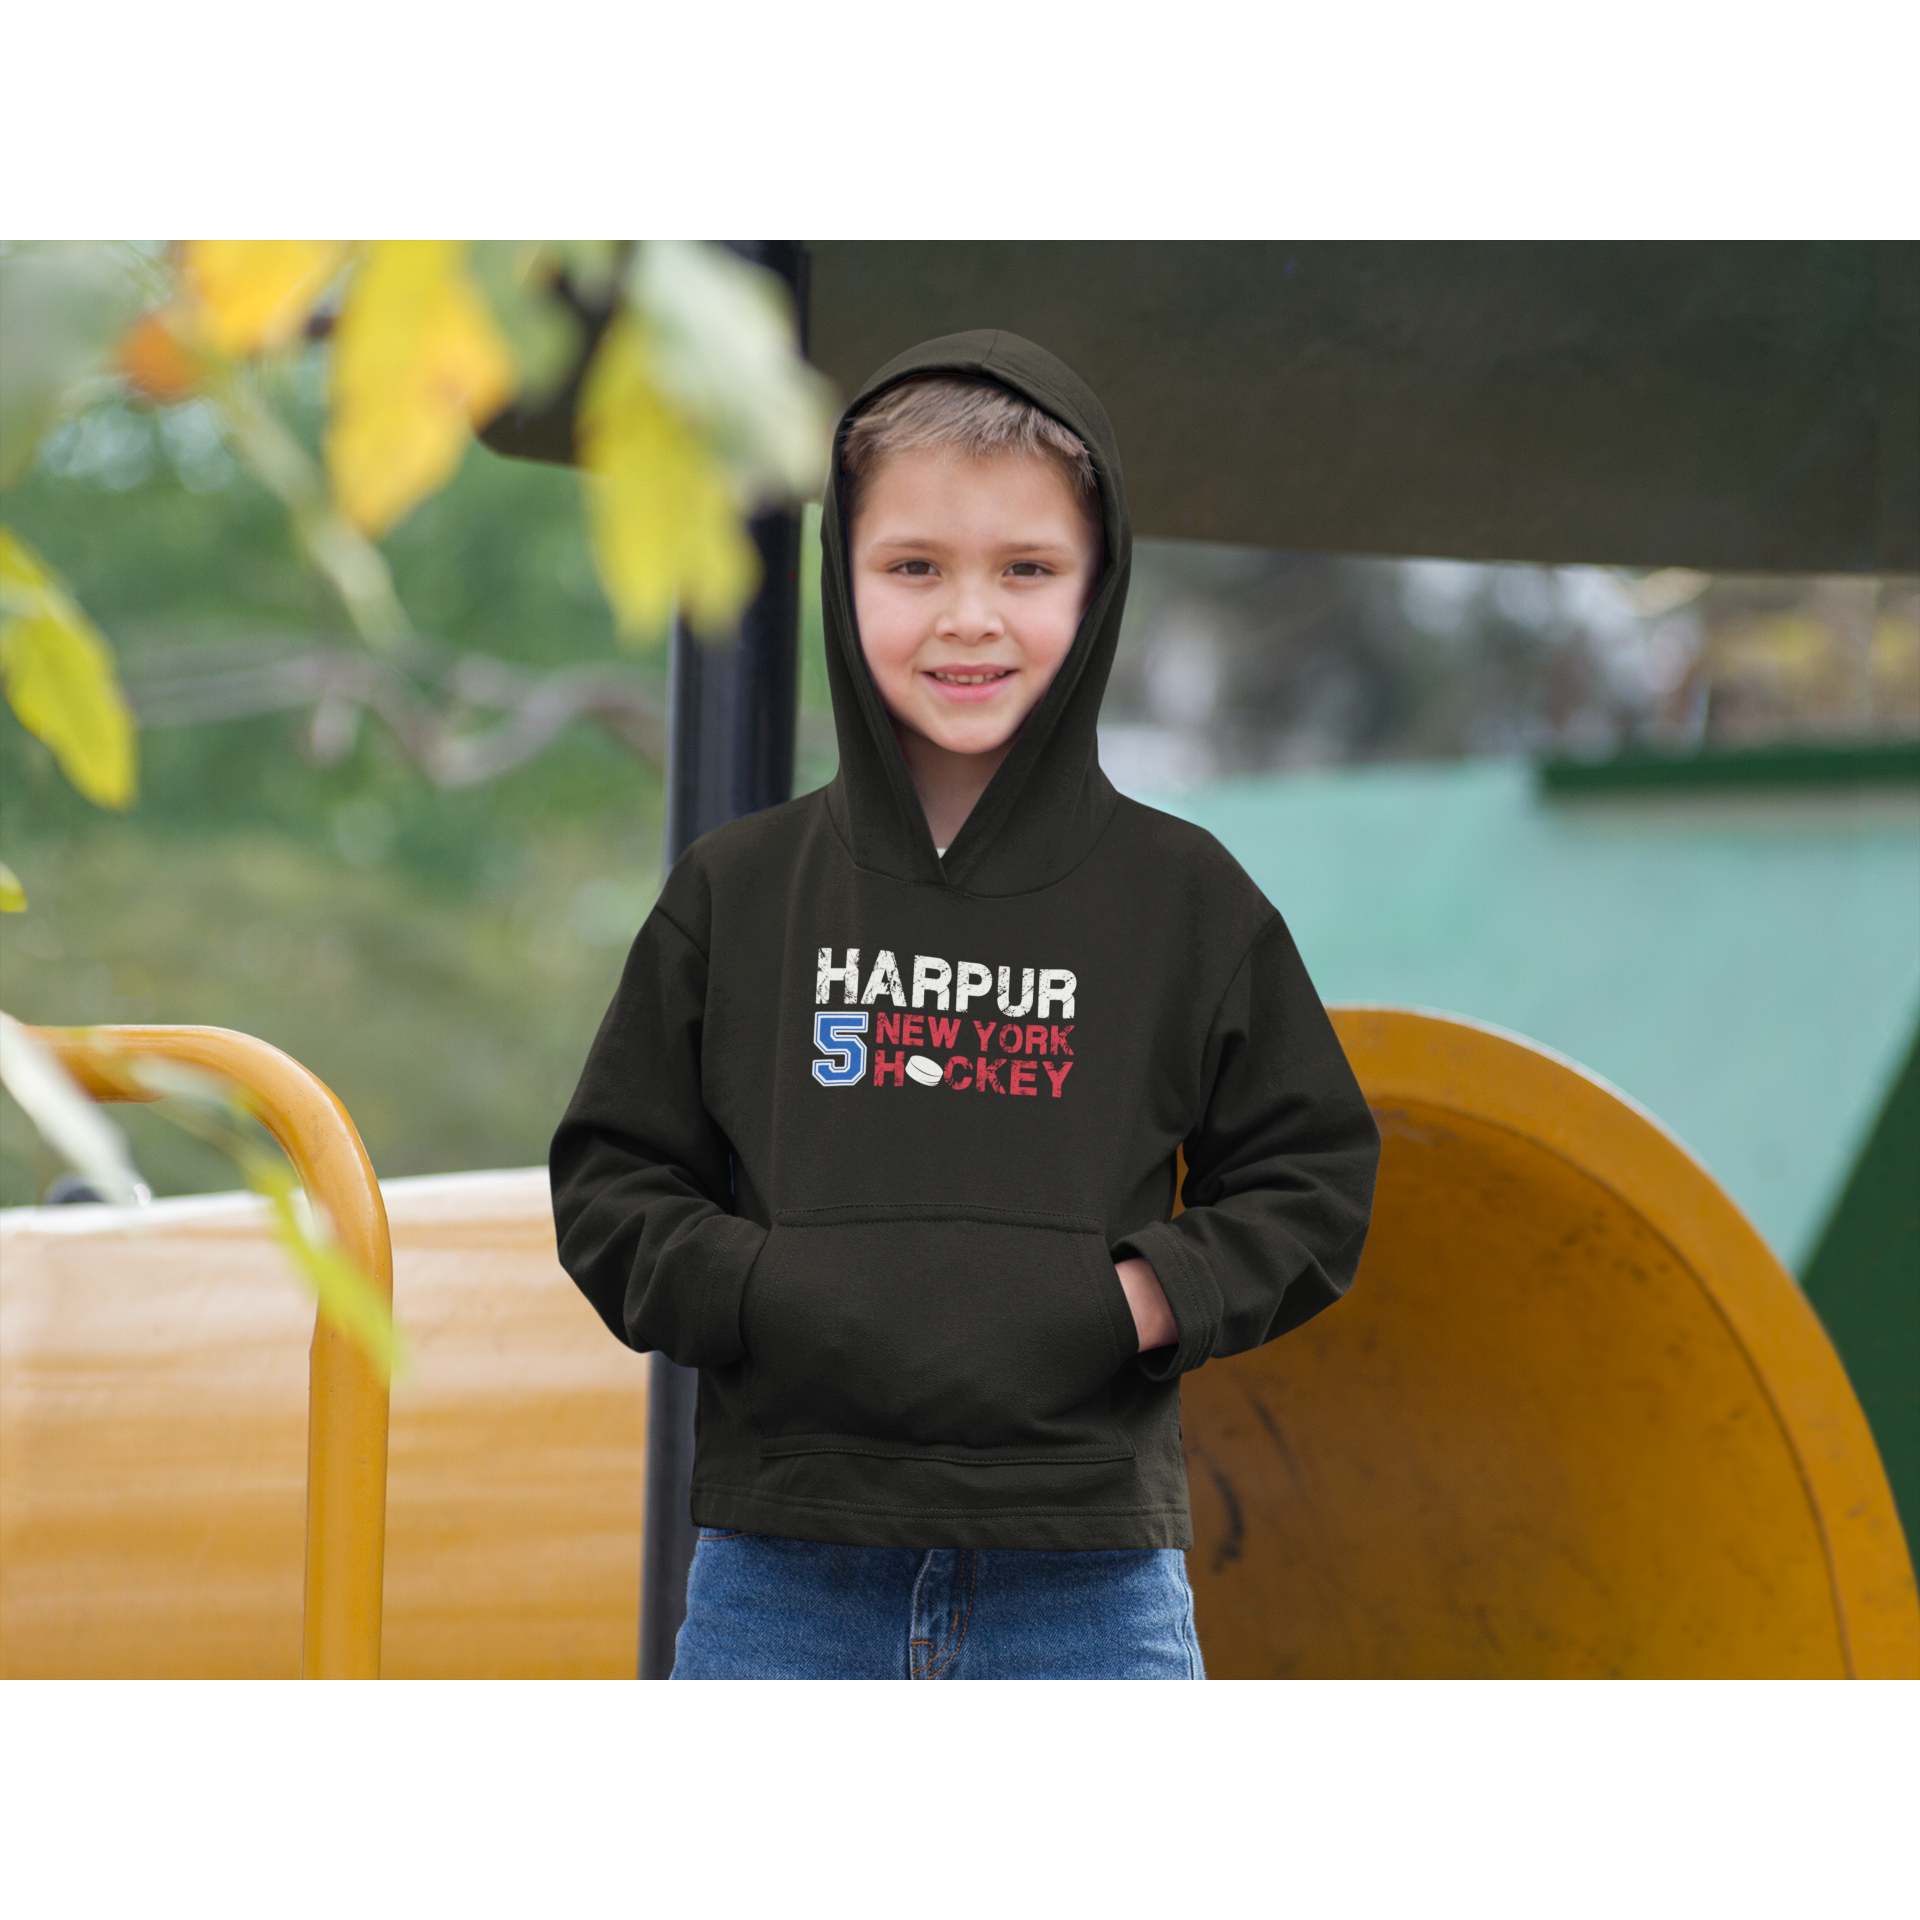 Harpur 5 New York Hockey Youth Hooded Sweatshirt